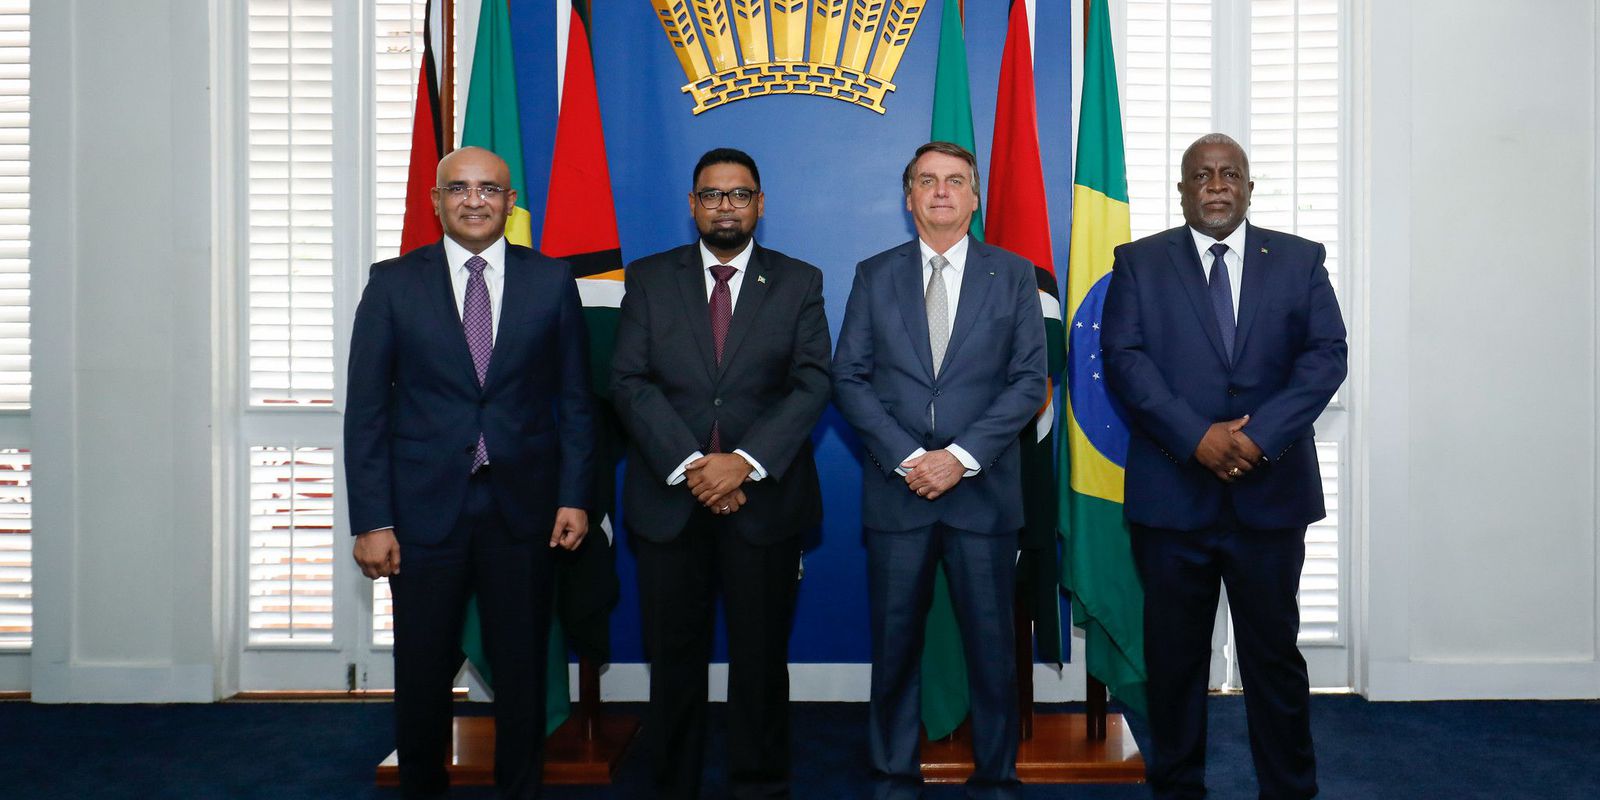 Presidents of Guyana and Brazil meet in Georgetown